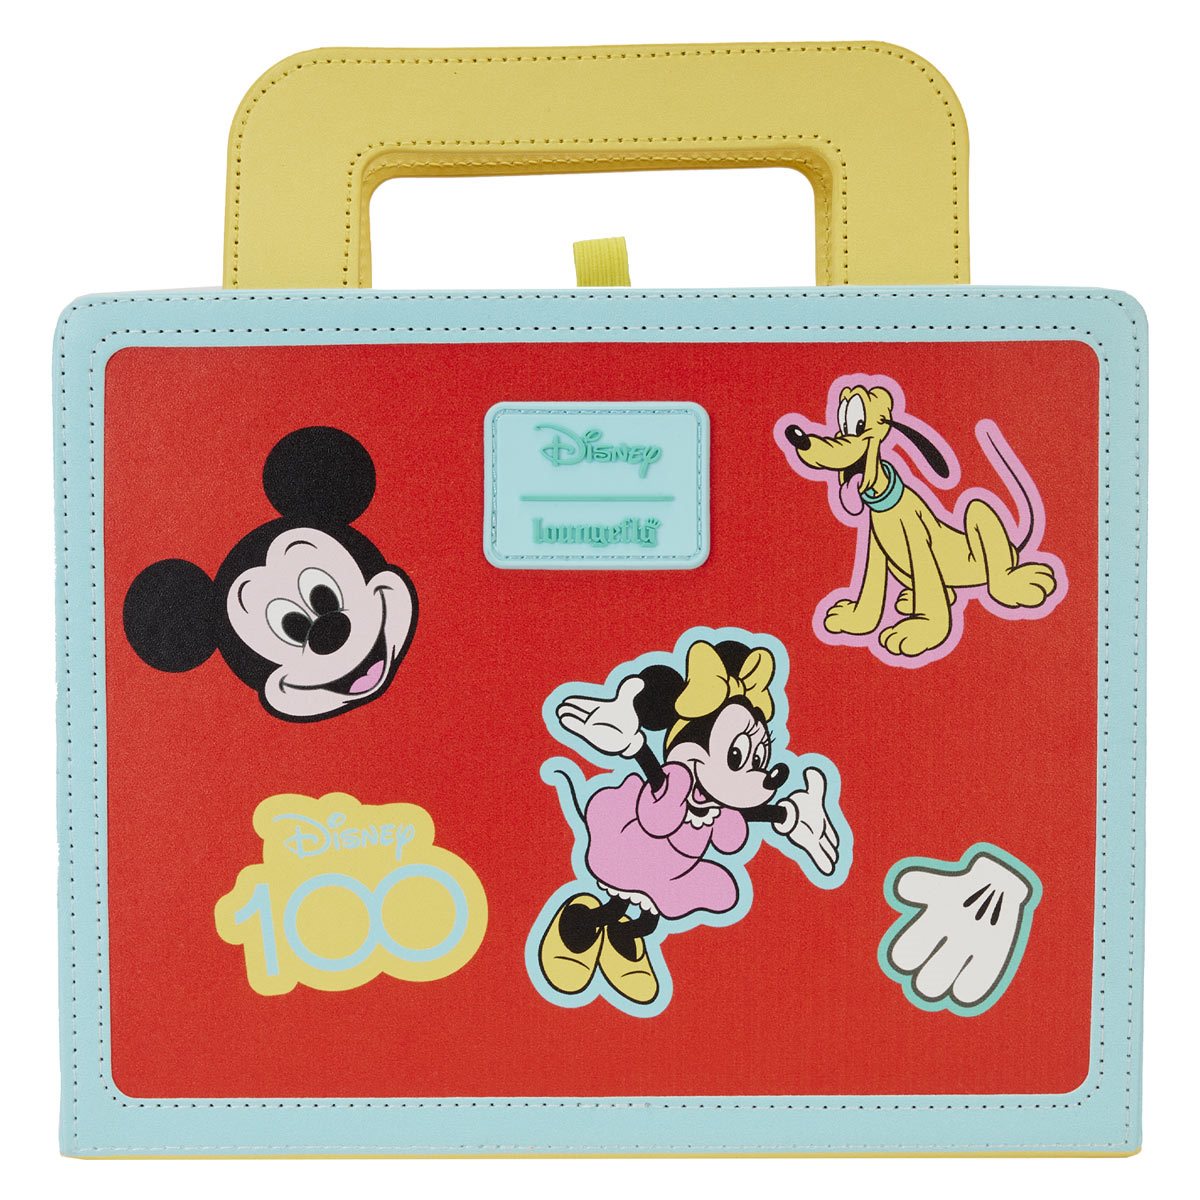 Disney Store Mickey and Minnie Journal Set